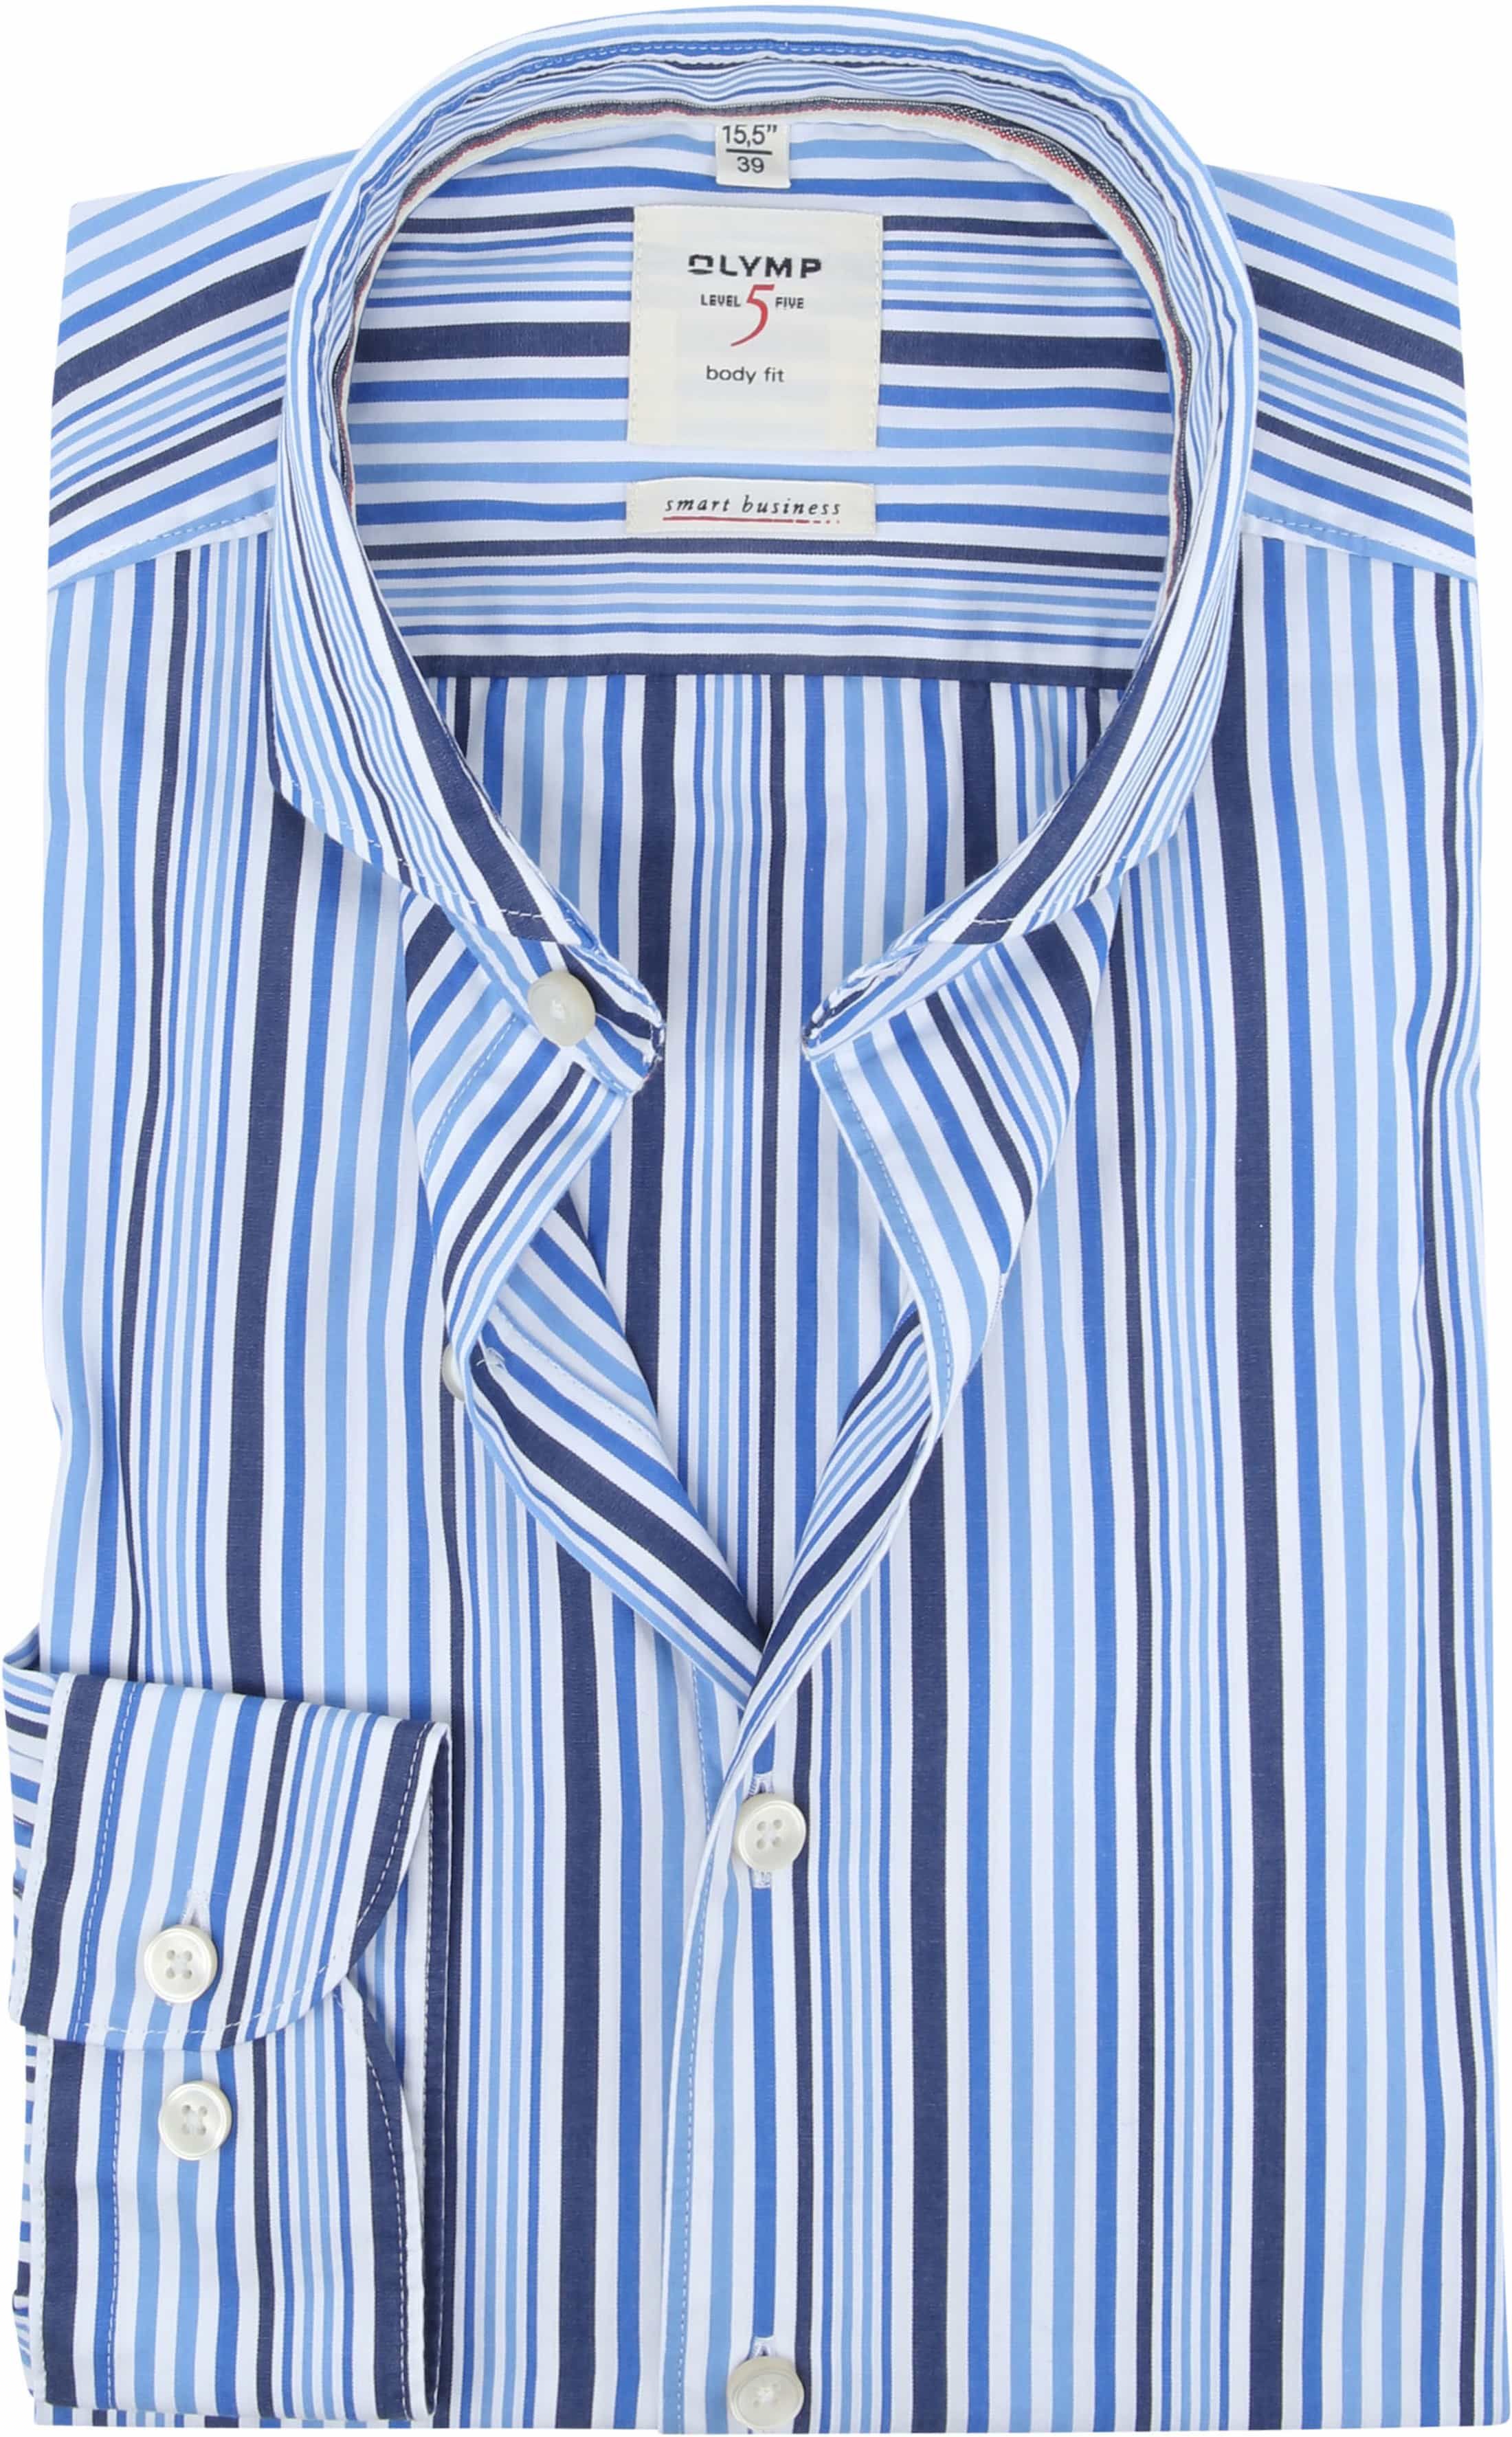 OLYMP Shirt Level 5 Stripes Blue size 16